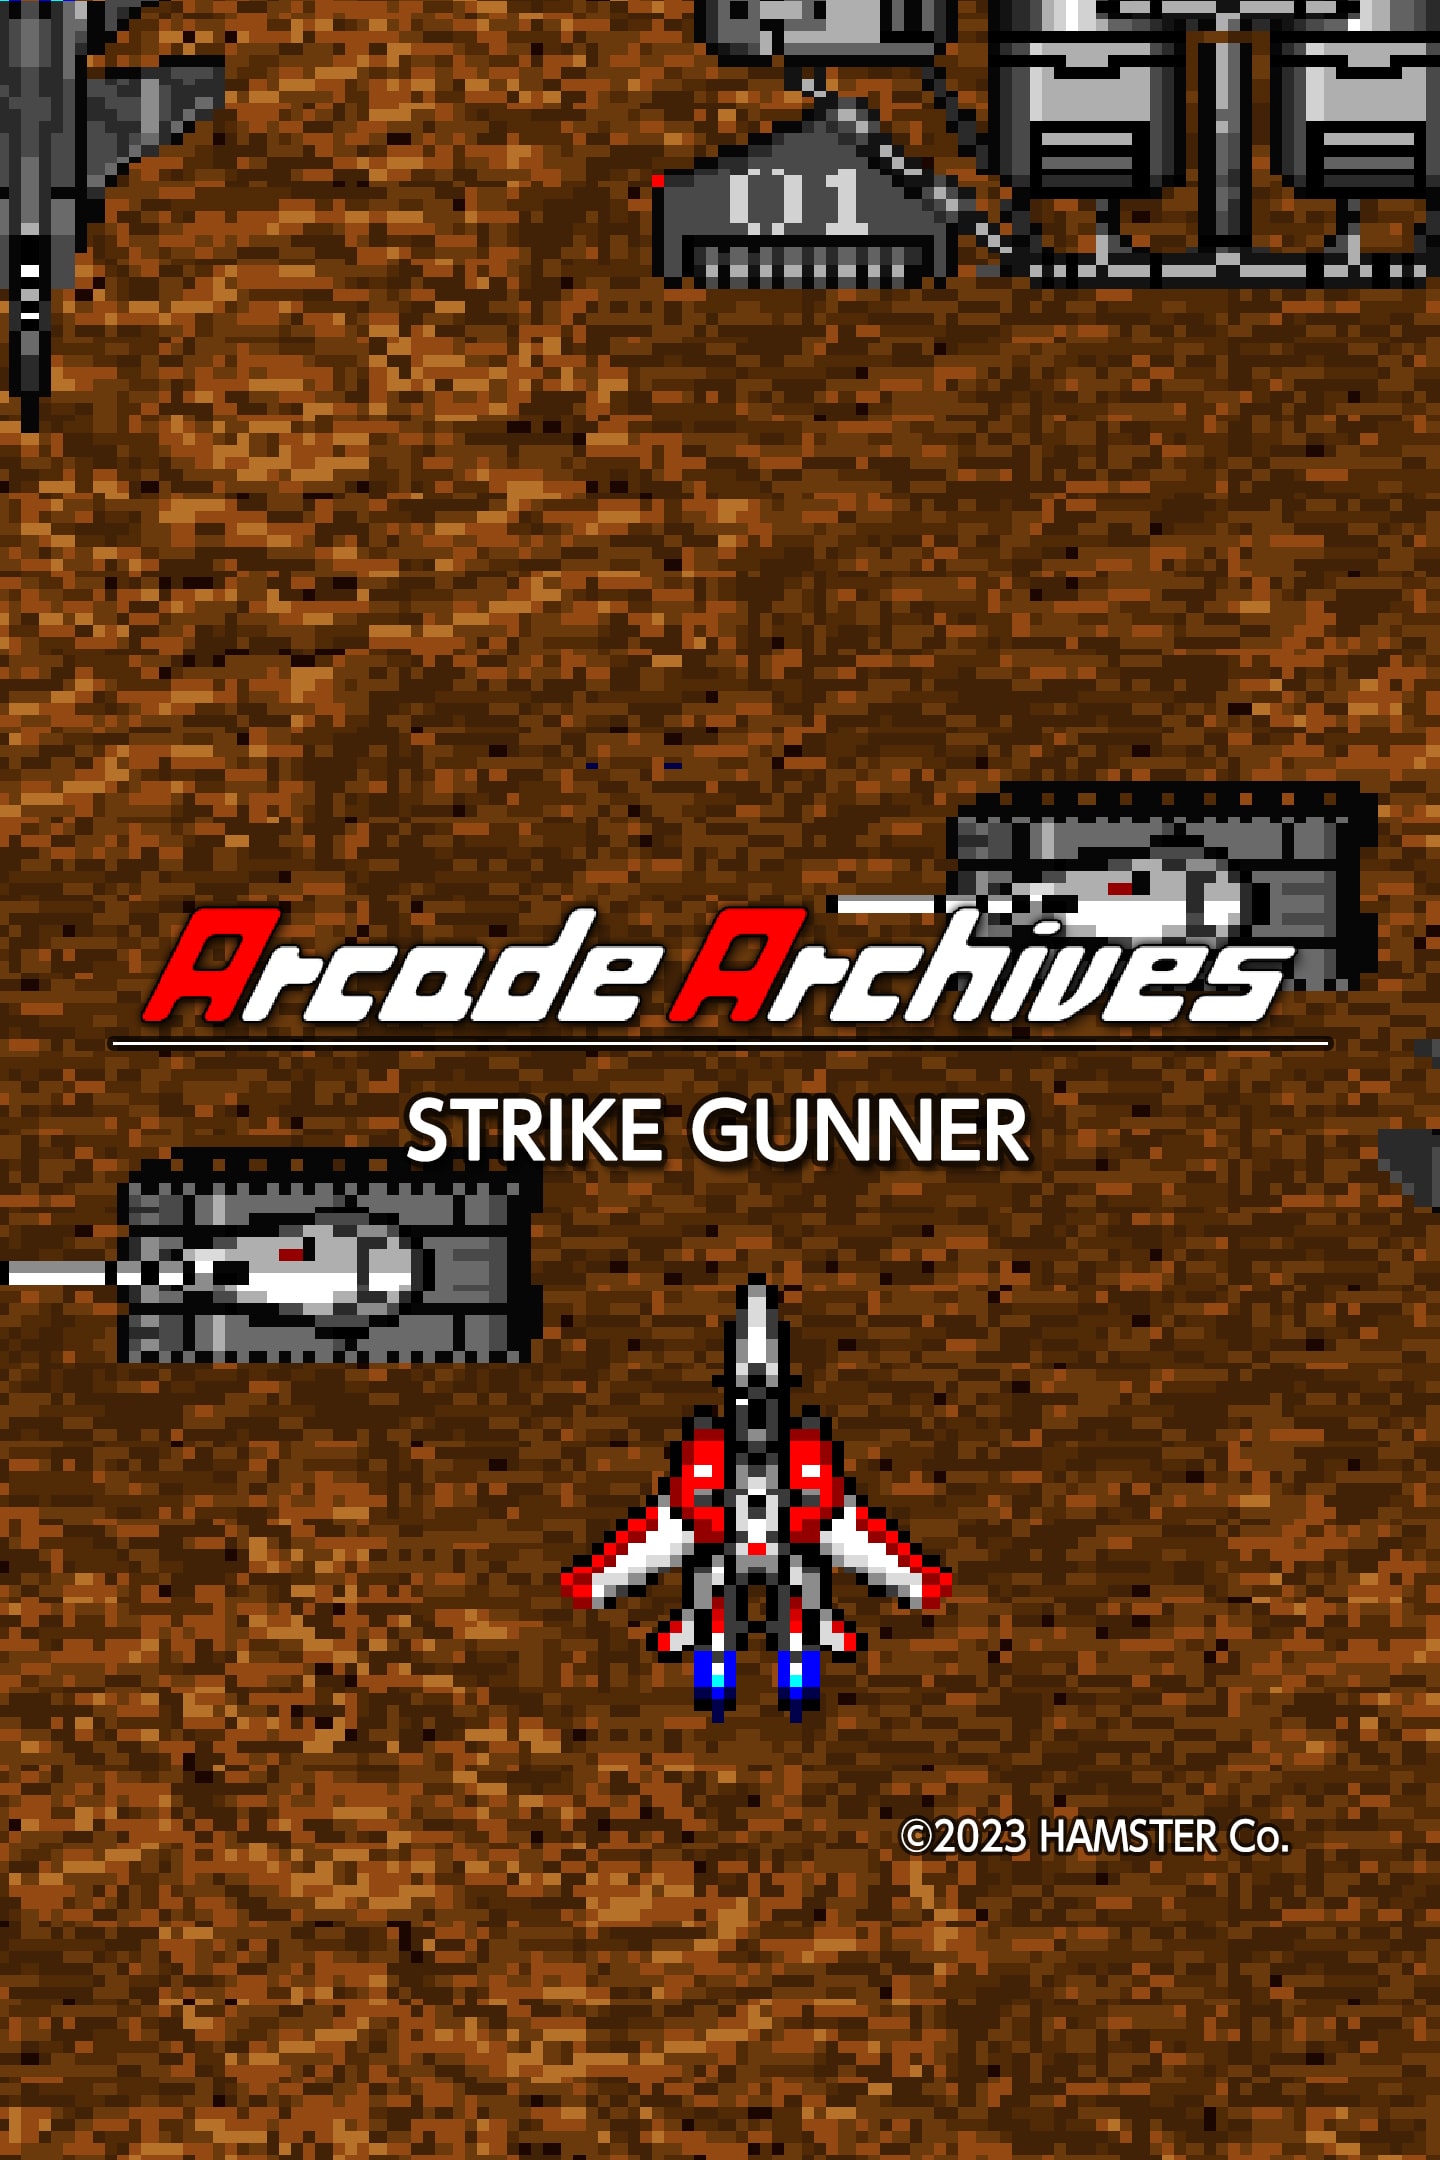 strike gunner  estágio 1  Super Nintendo 